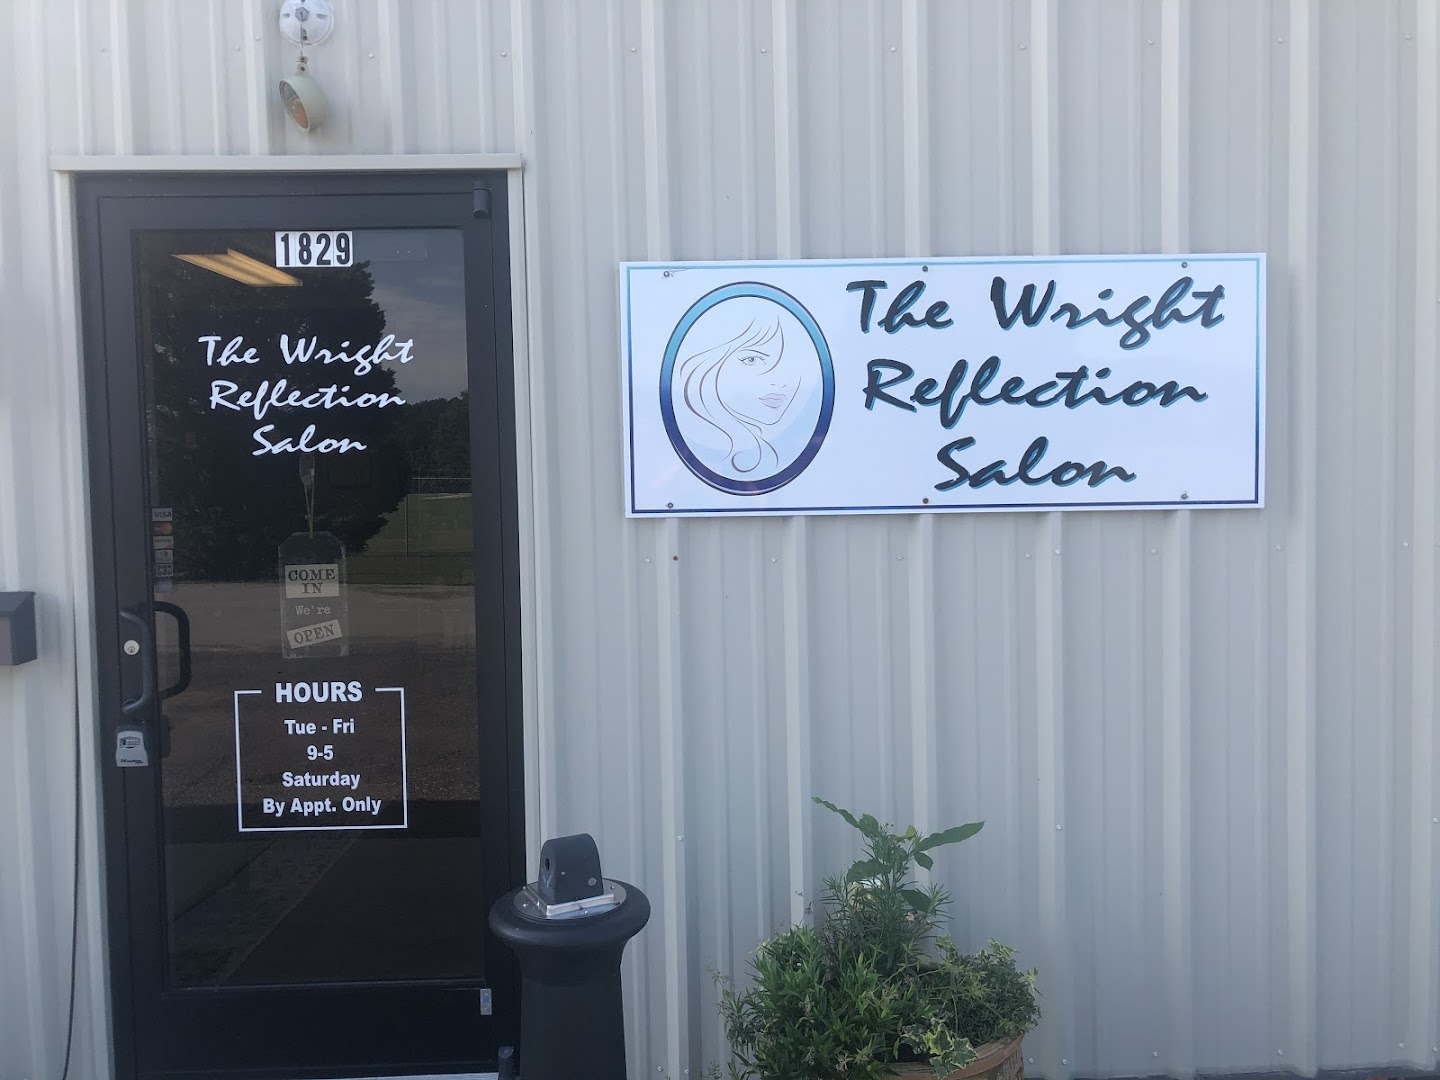 The Wright Reflection Salon